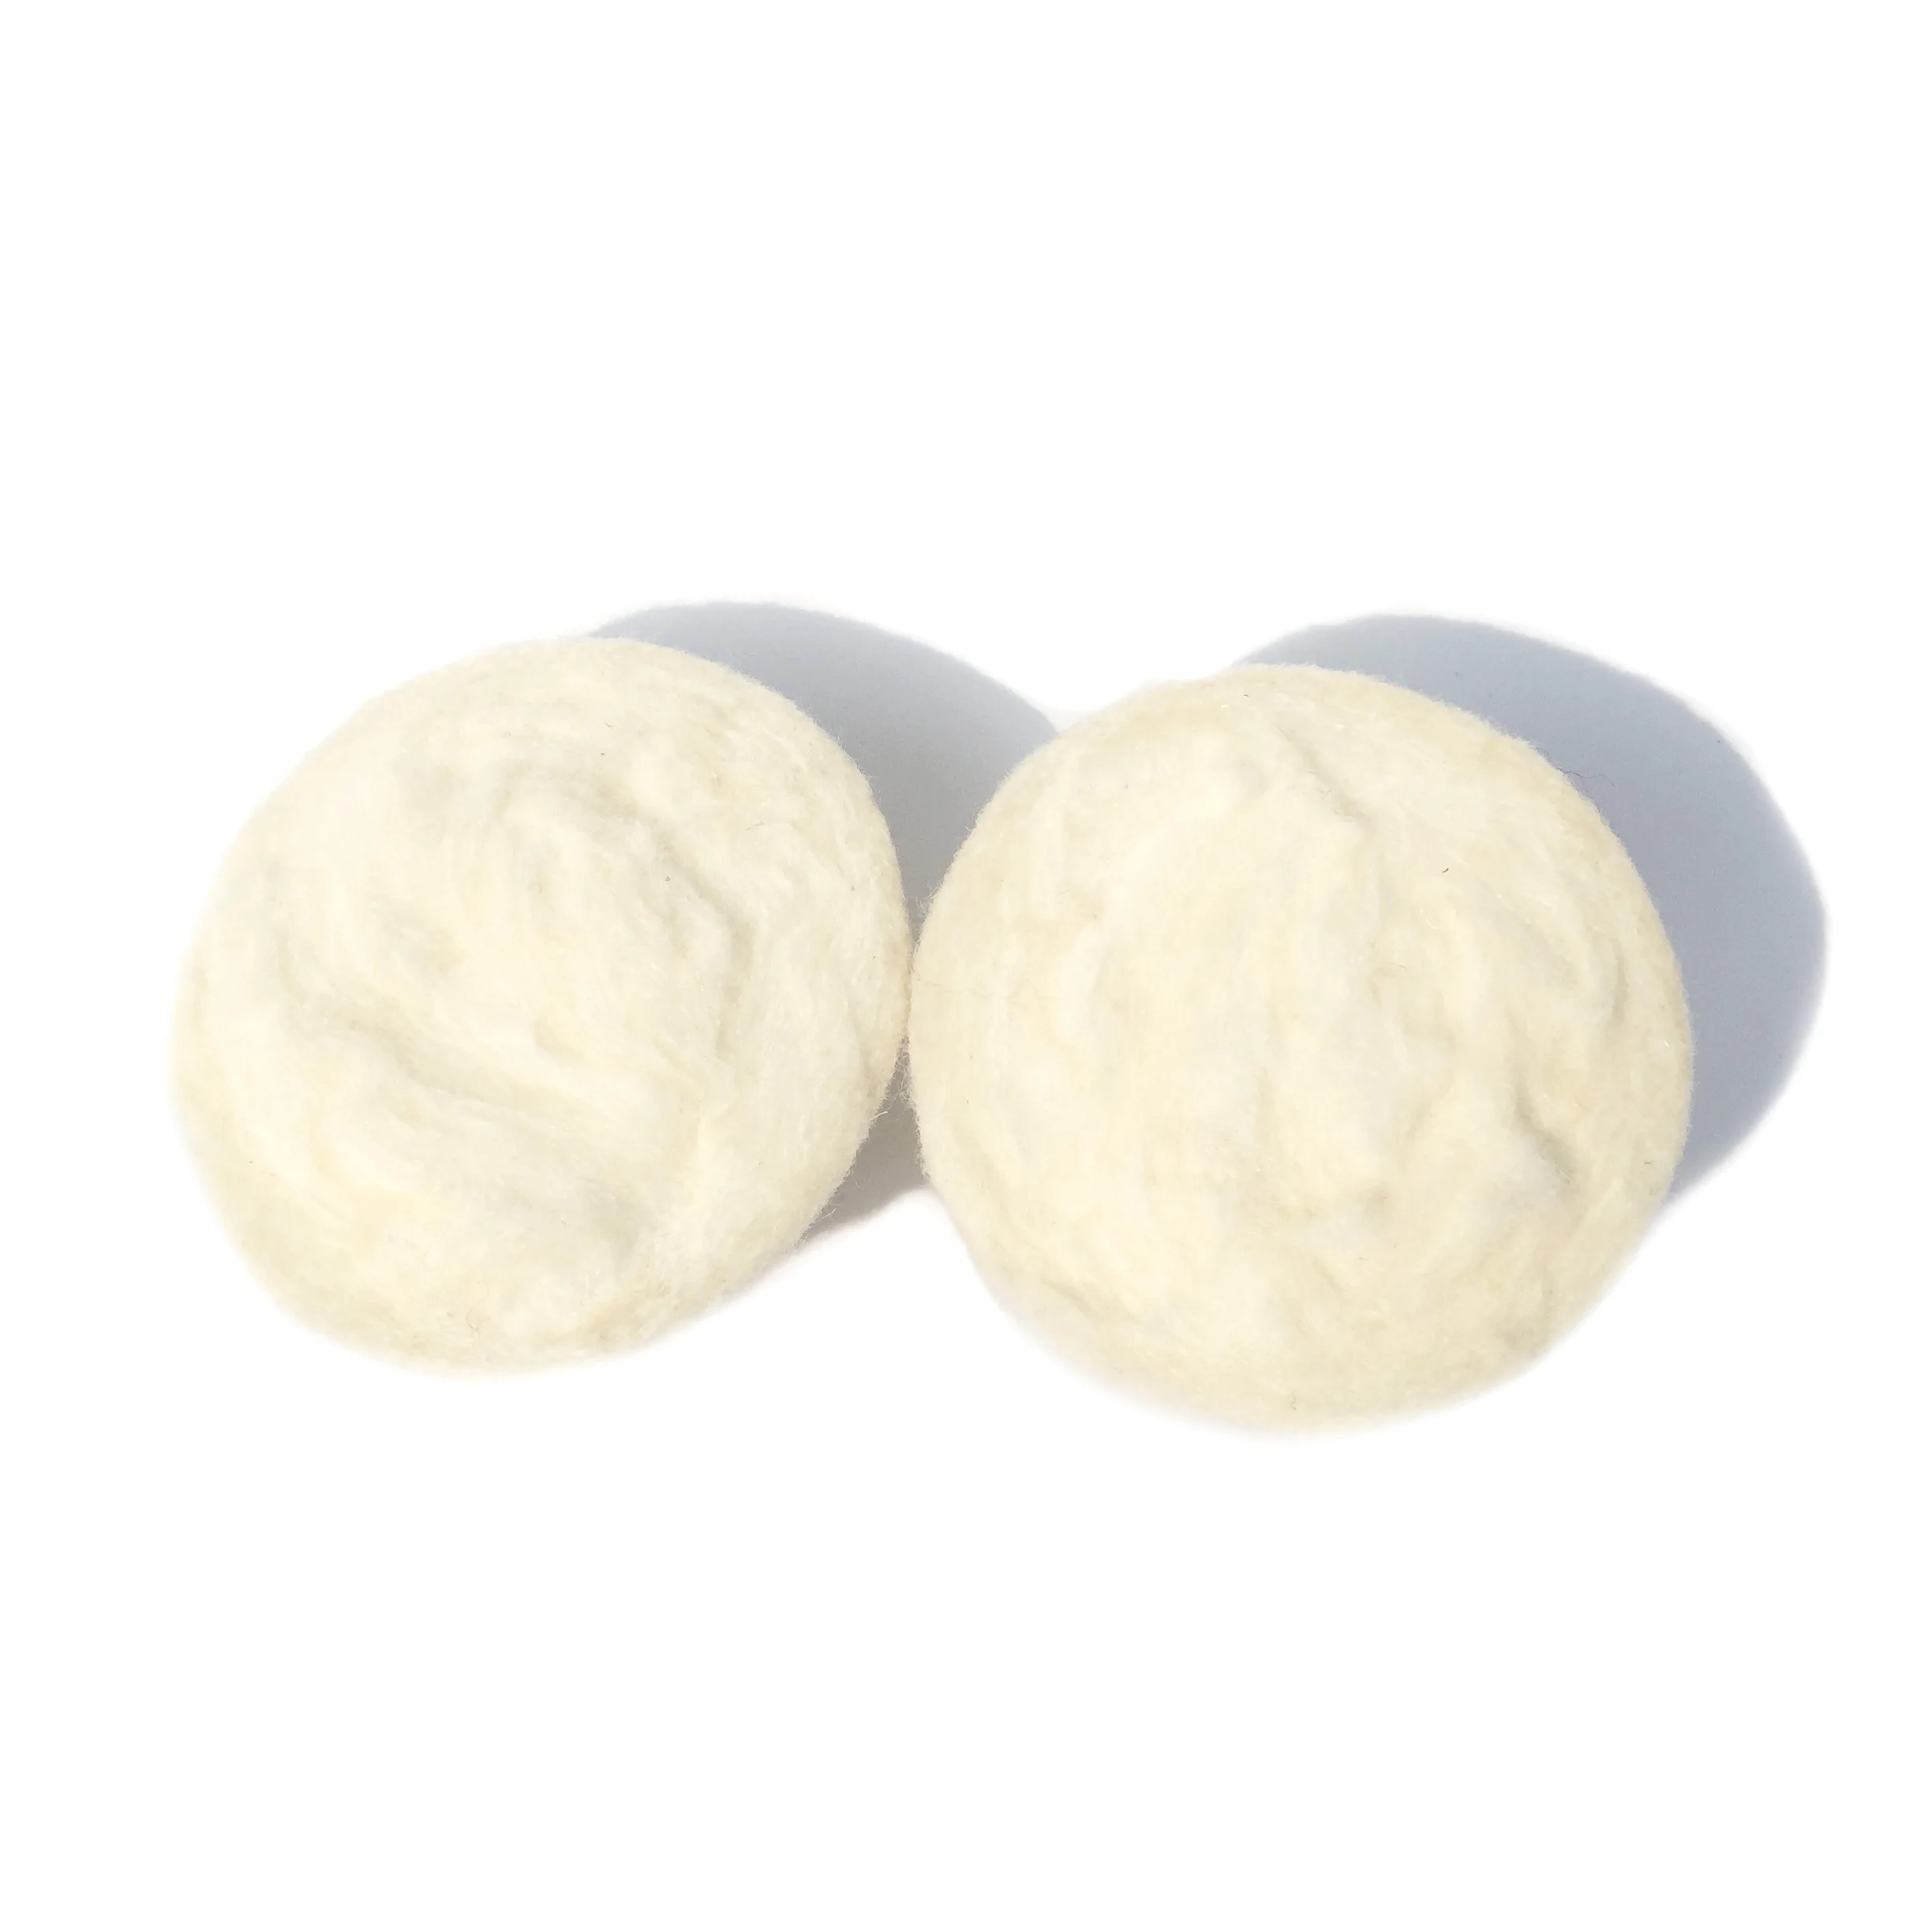 
Amazon hot sale Eco-friendly reusable organic wool felt laundry dryer balls 